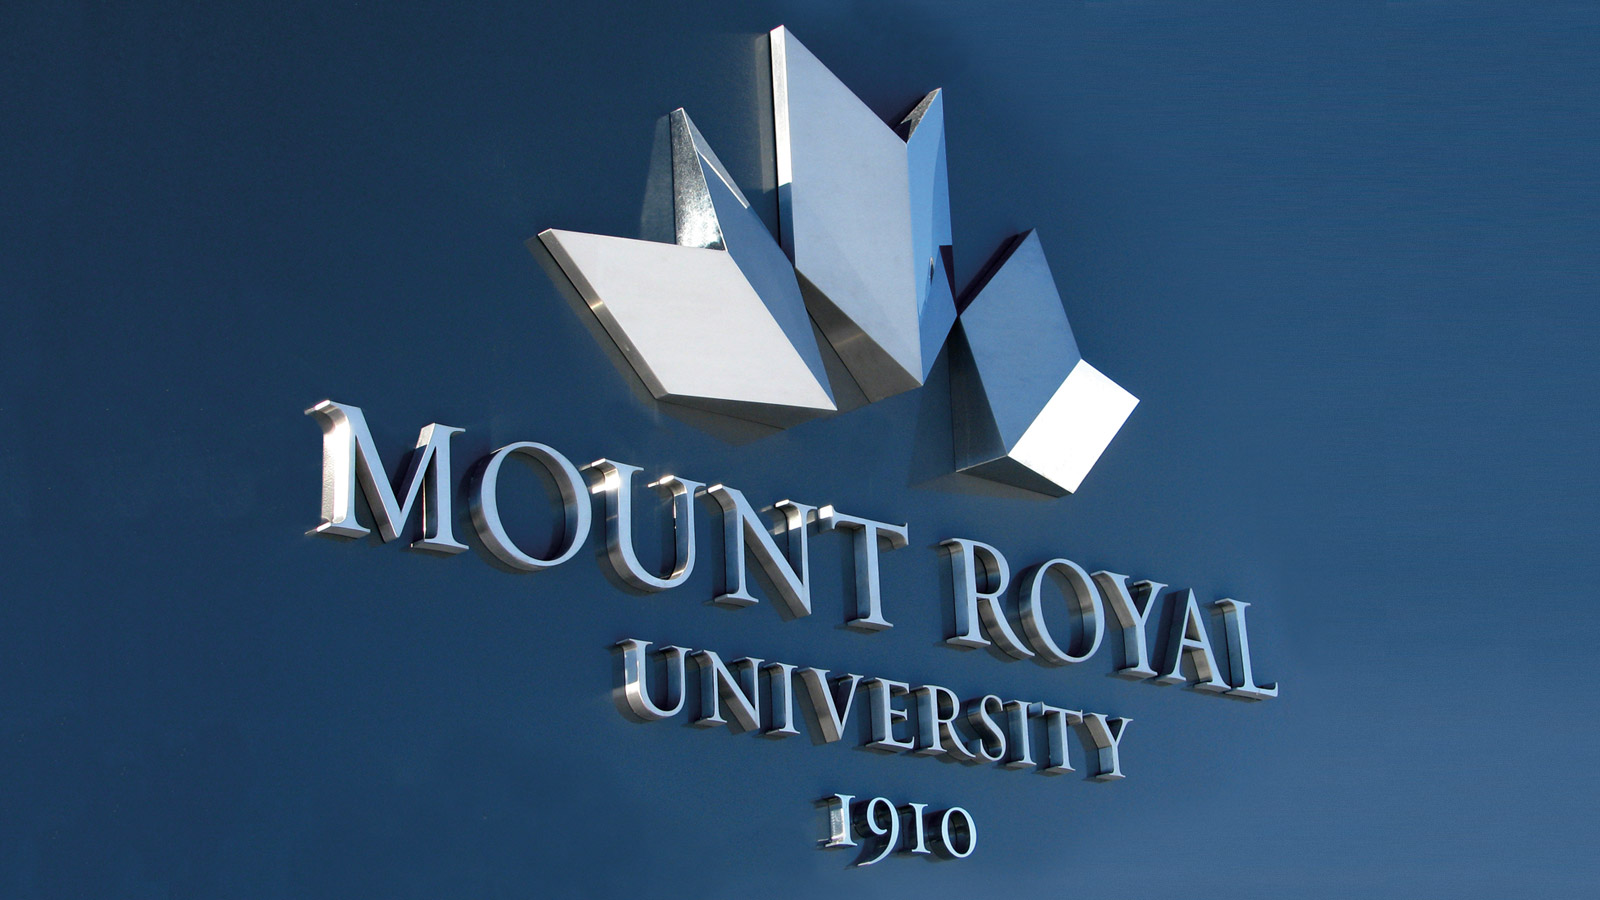 Mount Royal University | Campagne de marque | 